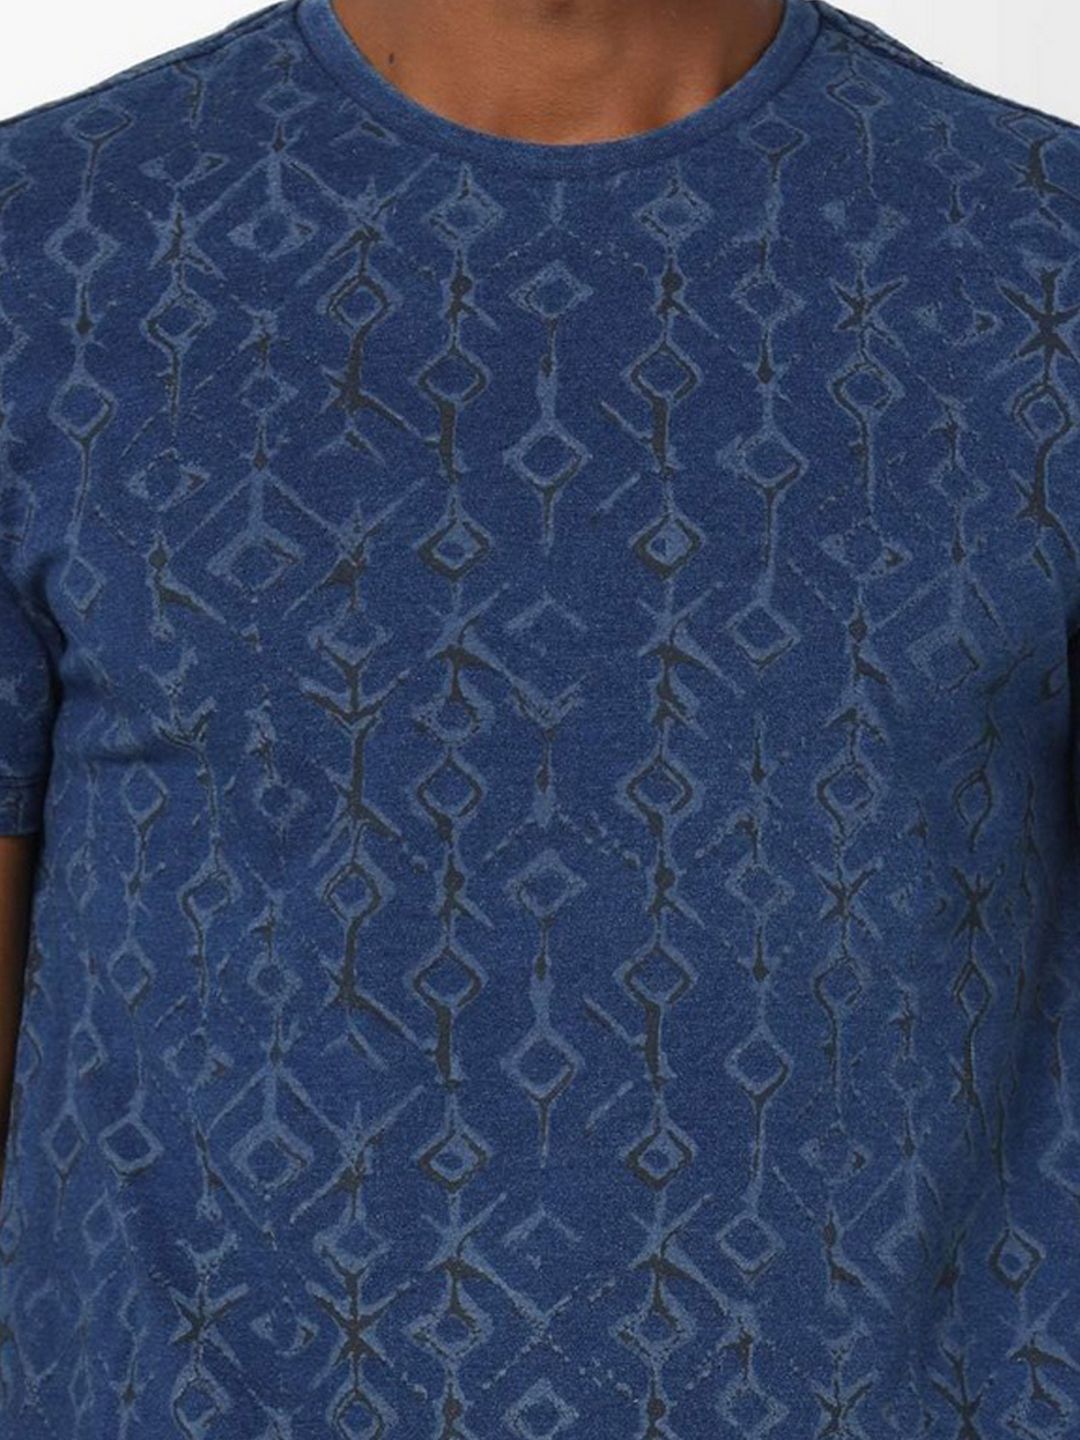 Men's Scuba geometric printed crew neck blue t-shirt